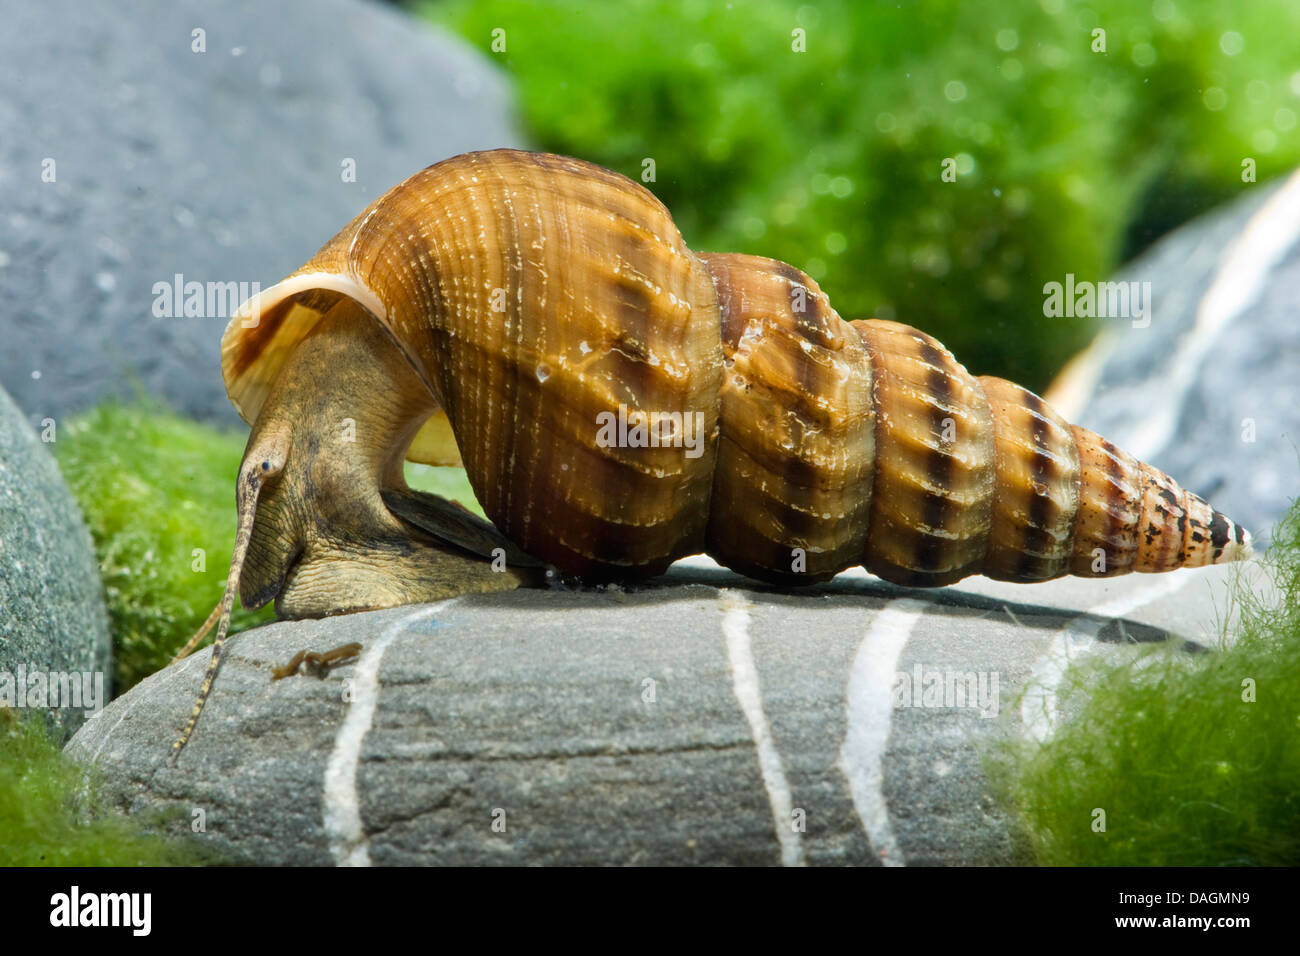 Giant tower cap snail (Brotia herculea), creeping on a stone Stock Photo